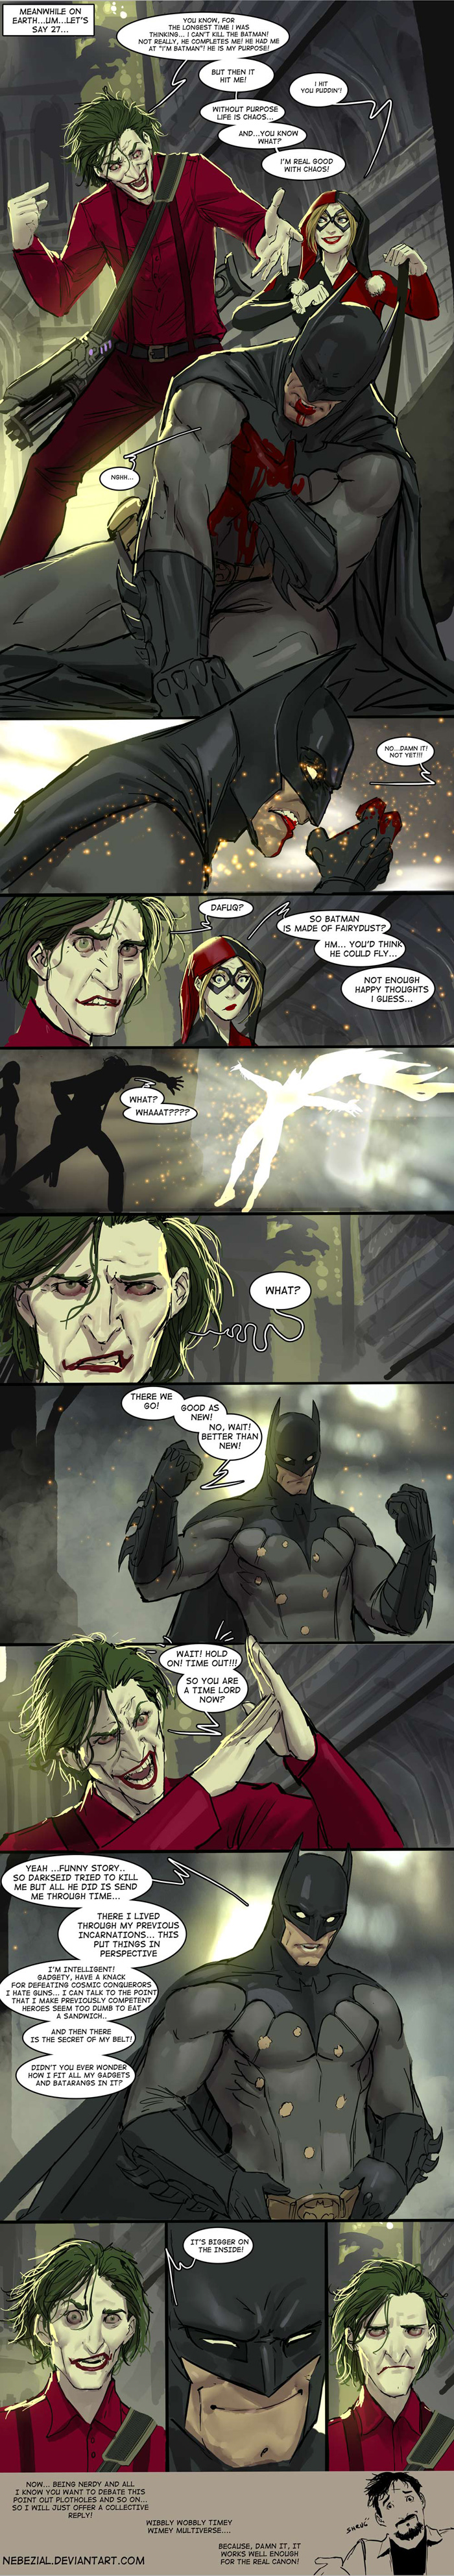 batman-doctor-who-timelord-comic-01.jpg